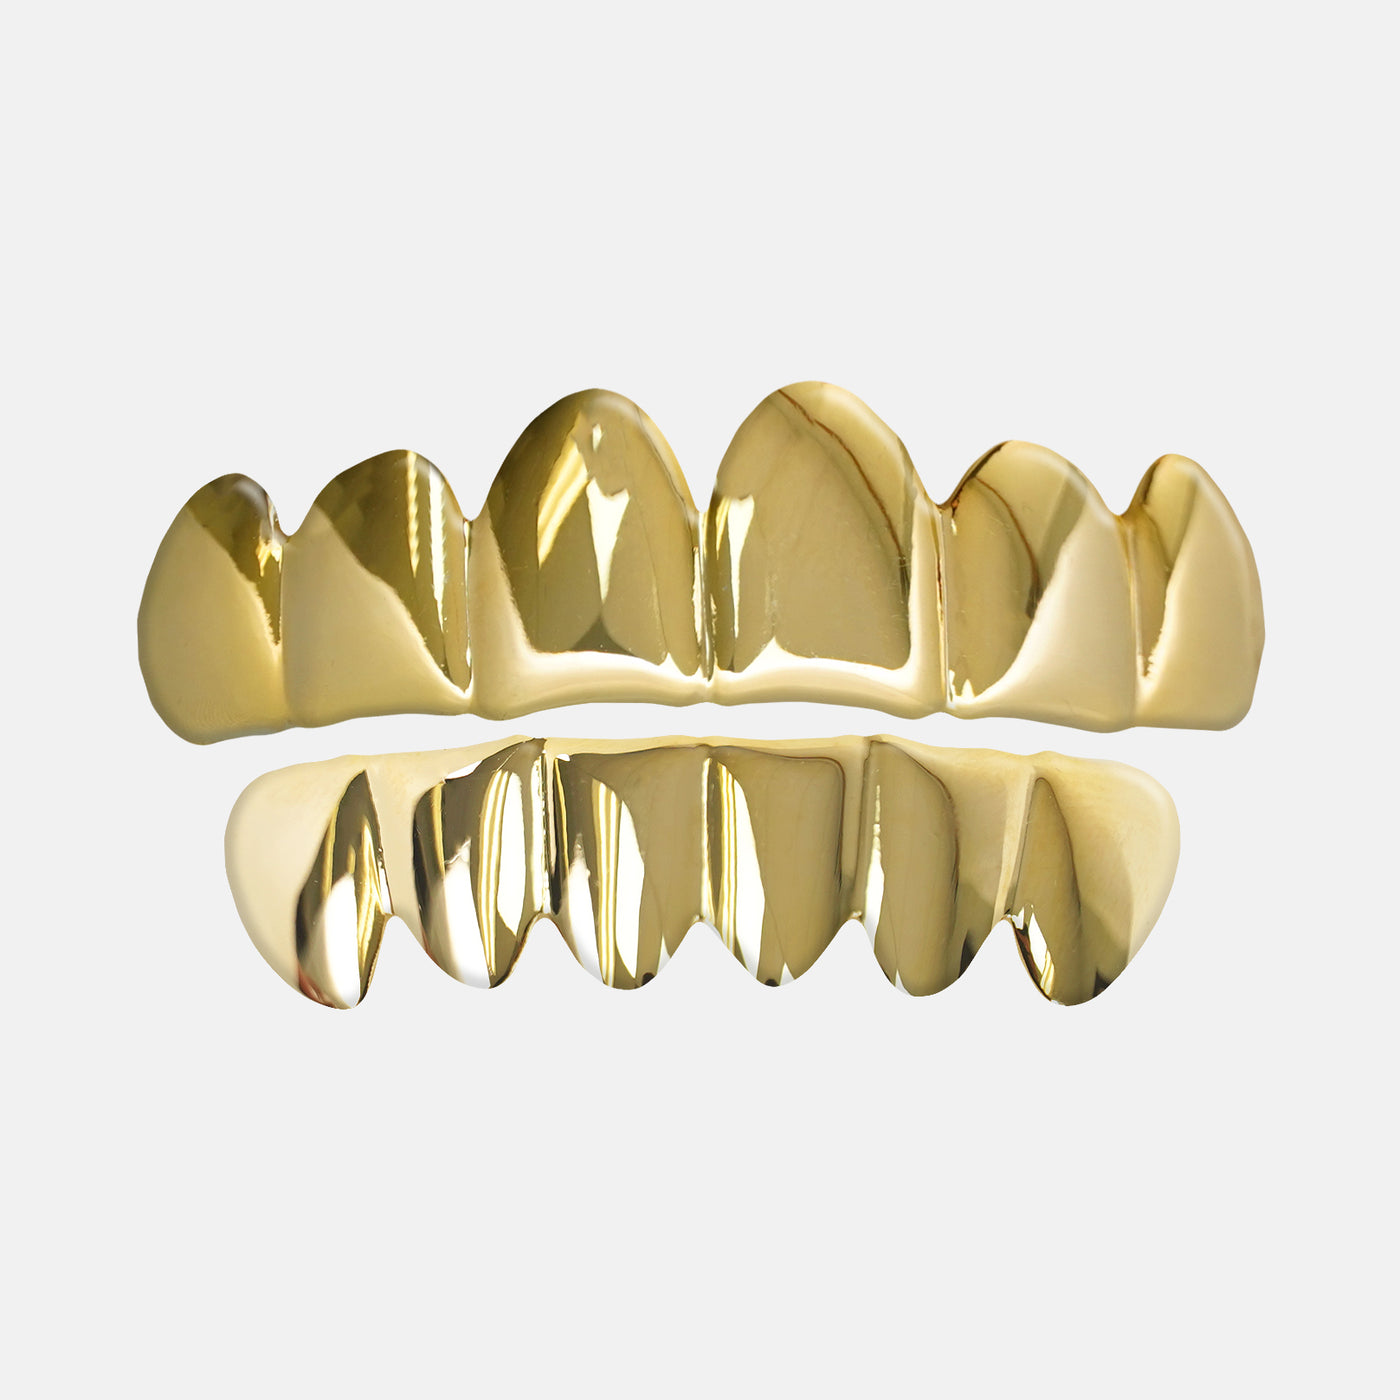 Golden Teeth Grillz Set